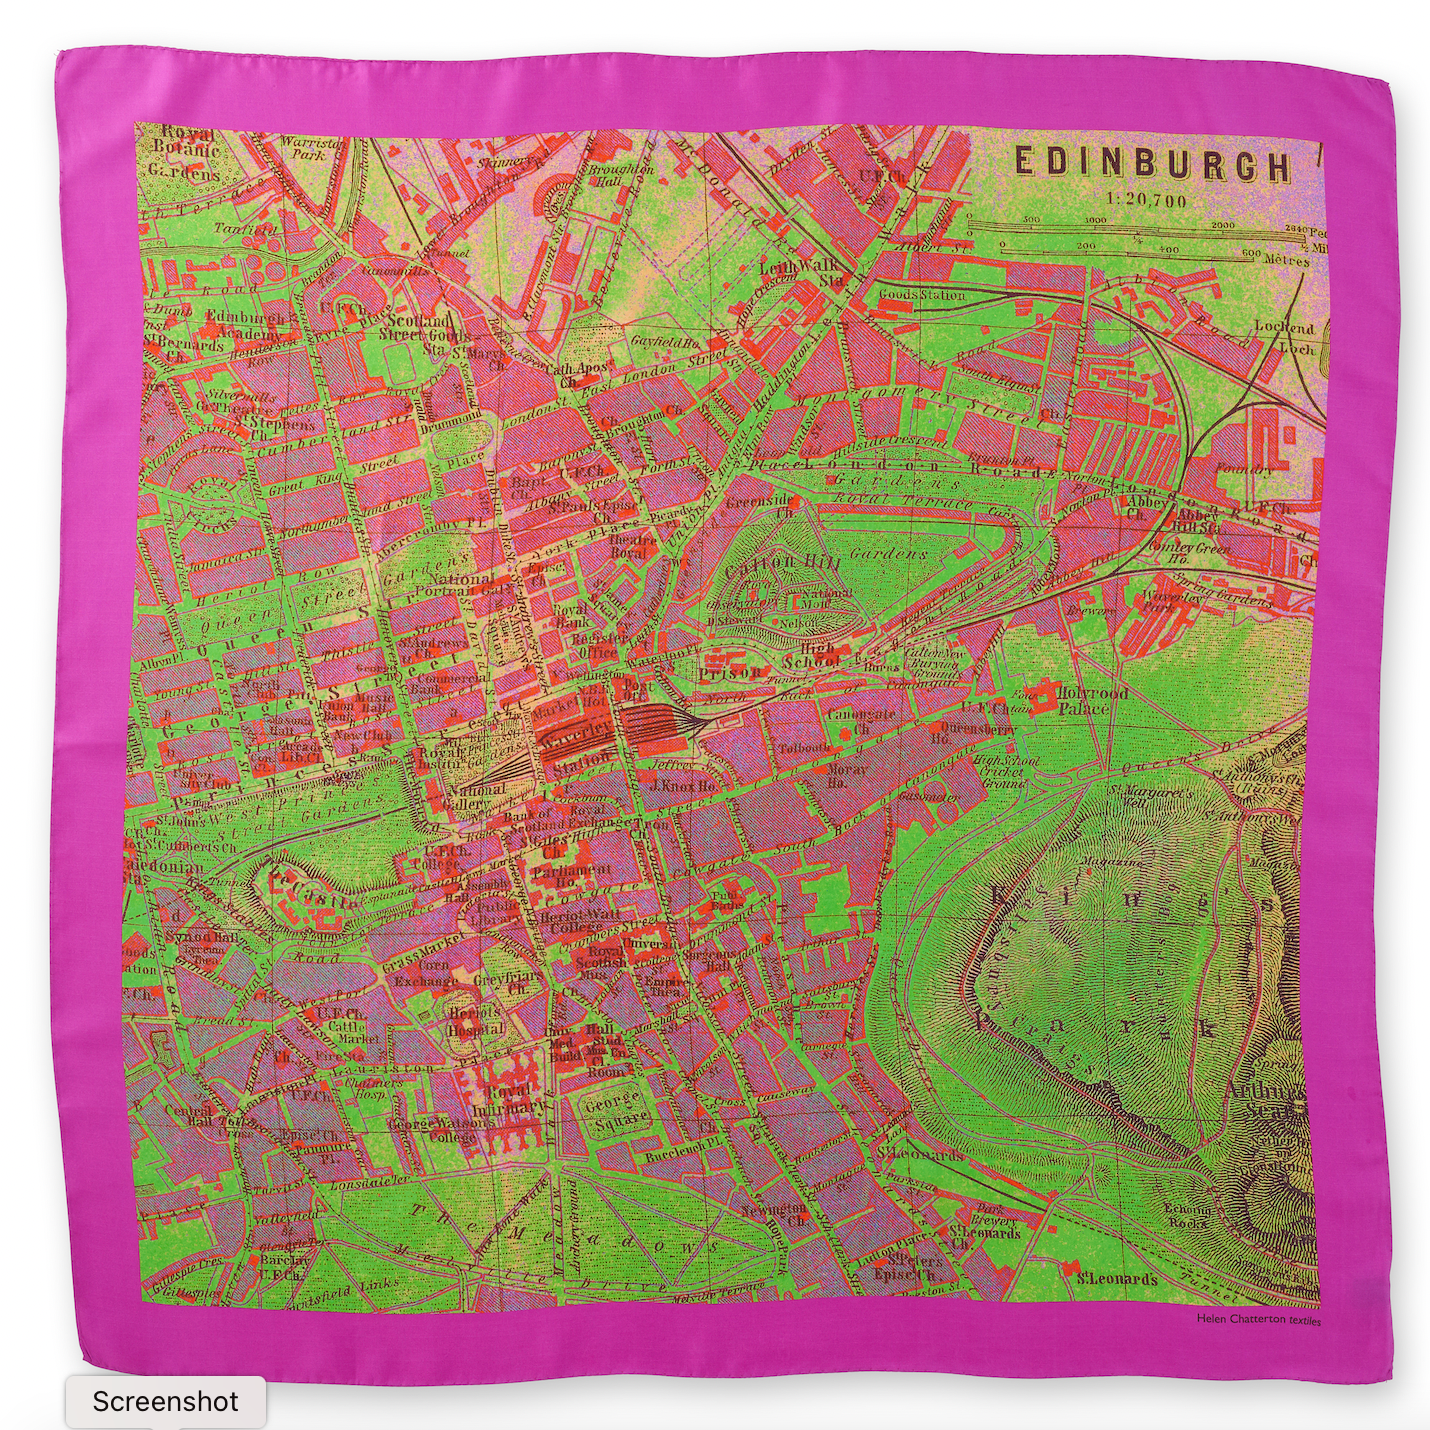 Handmade silk scarf with the city map of edinburgh